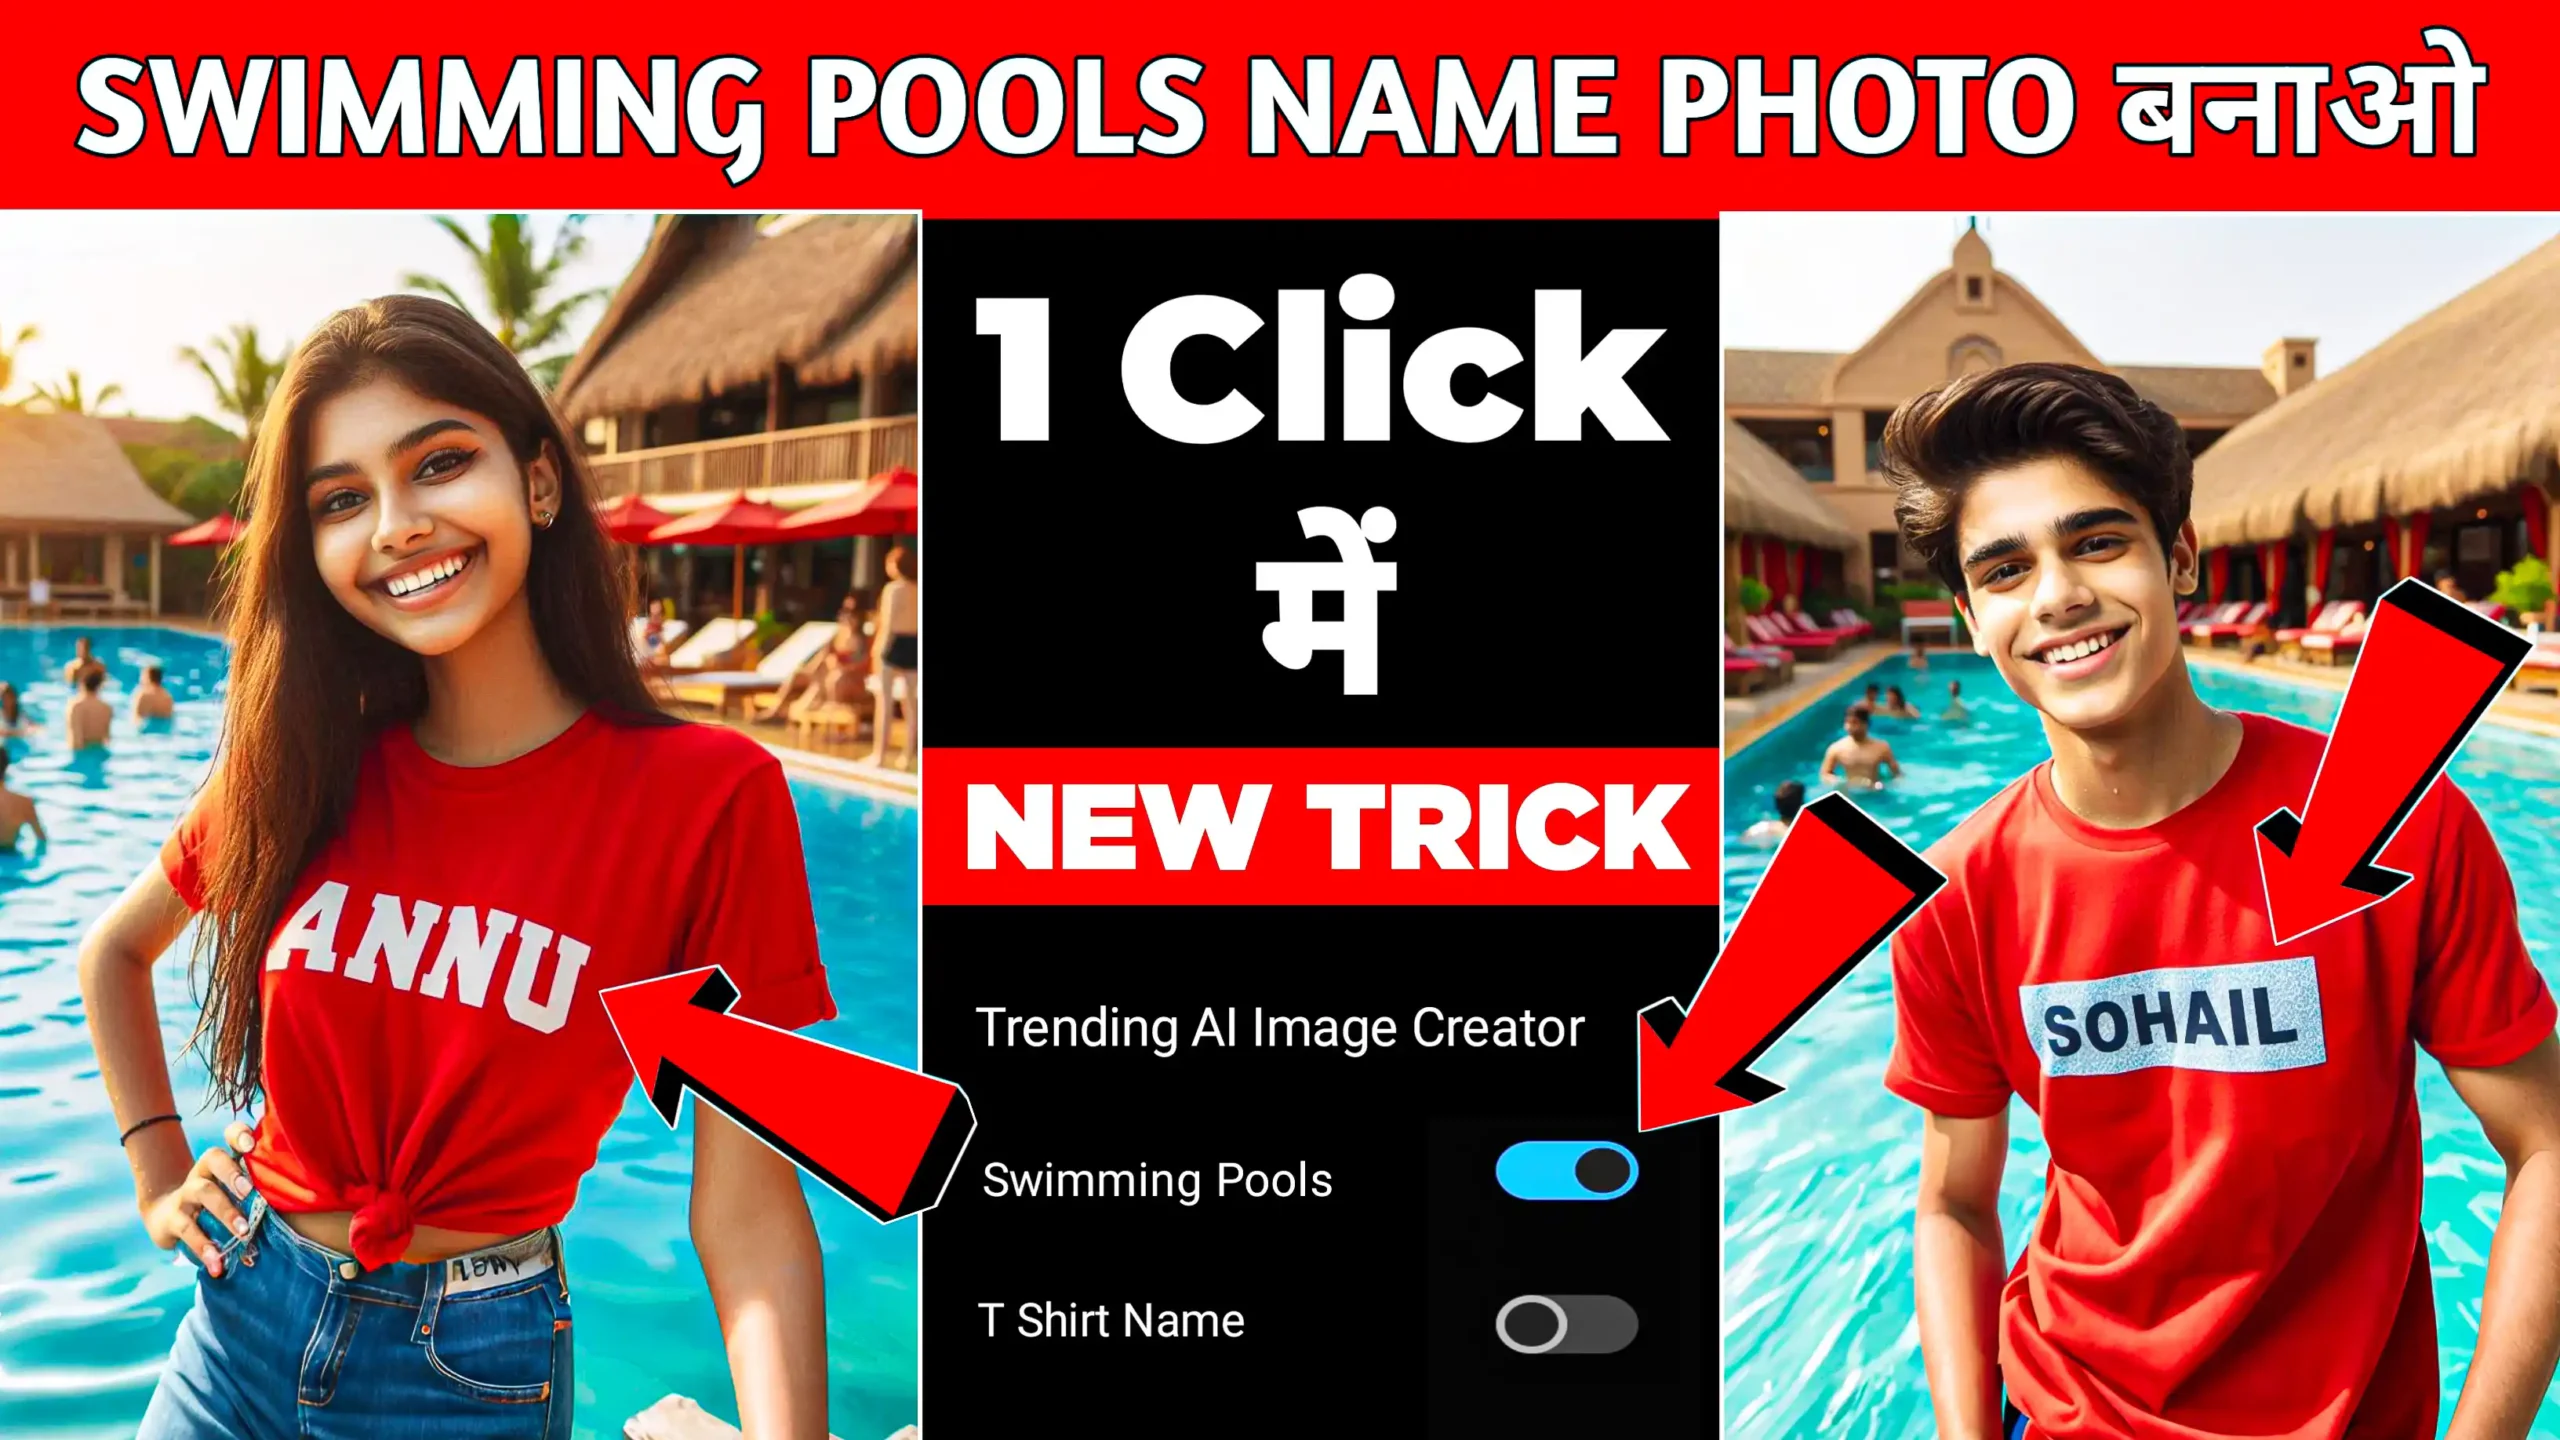 Bing AI Swimming Pools T Shirt Name Photo generator